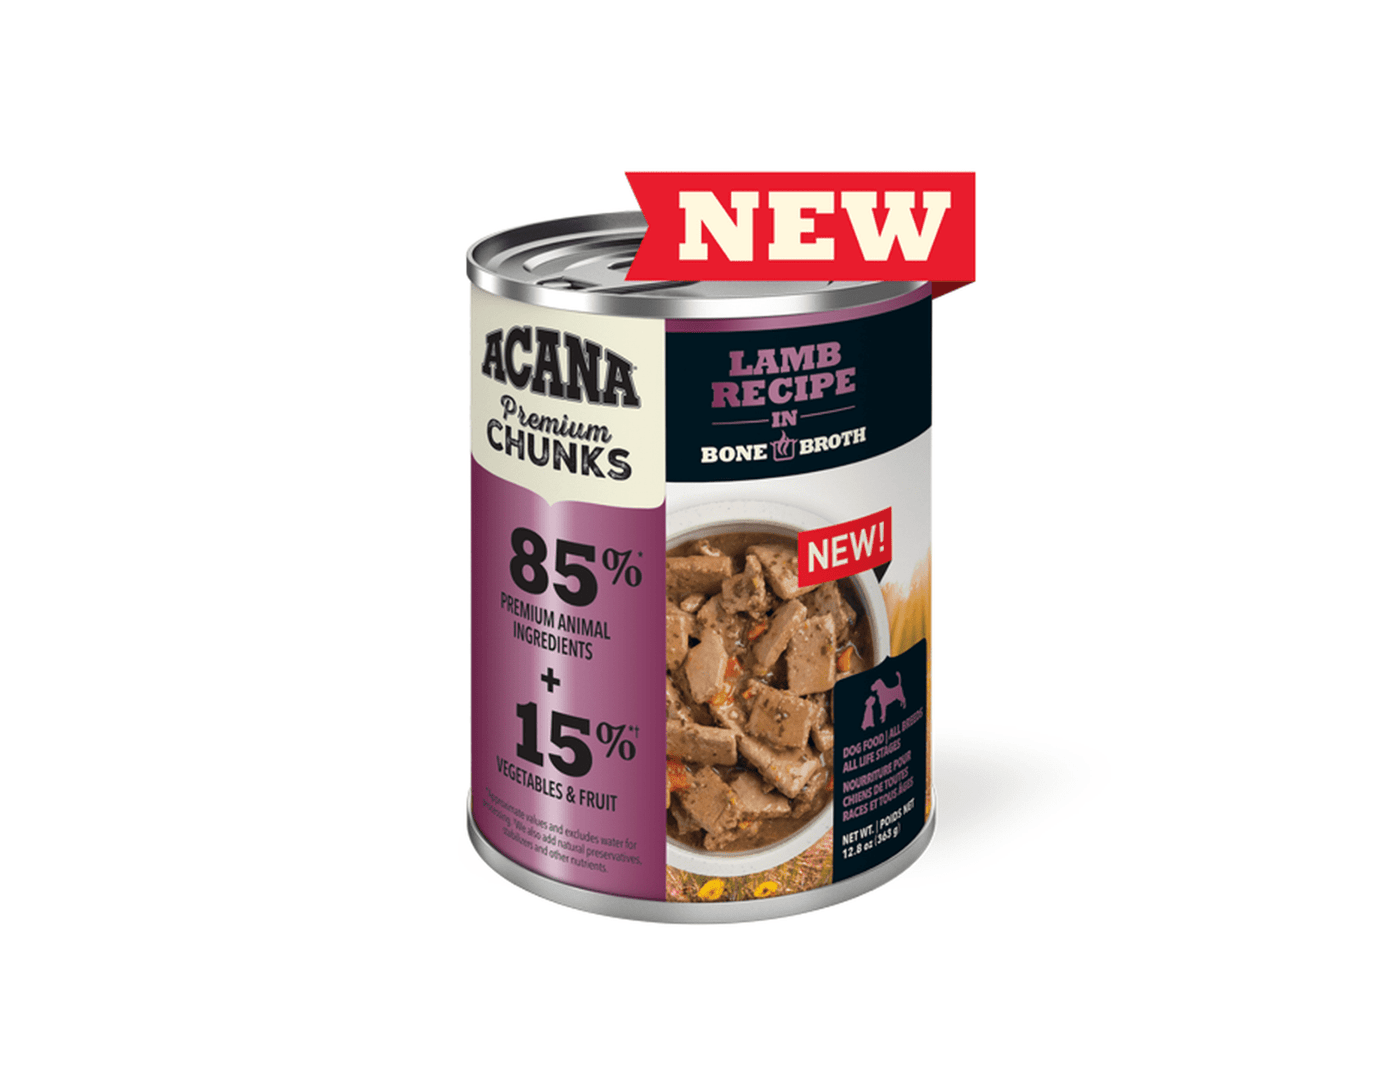 ACANA Premium Chunks - Lamb Recipe in Bone Broth 12.8 oz - Wet Dog Food - ACANA - PetToba-ACANA